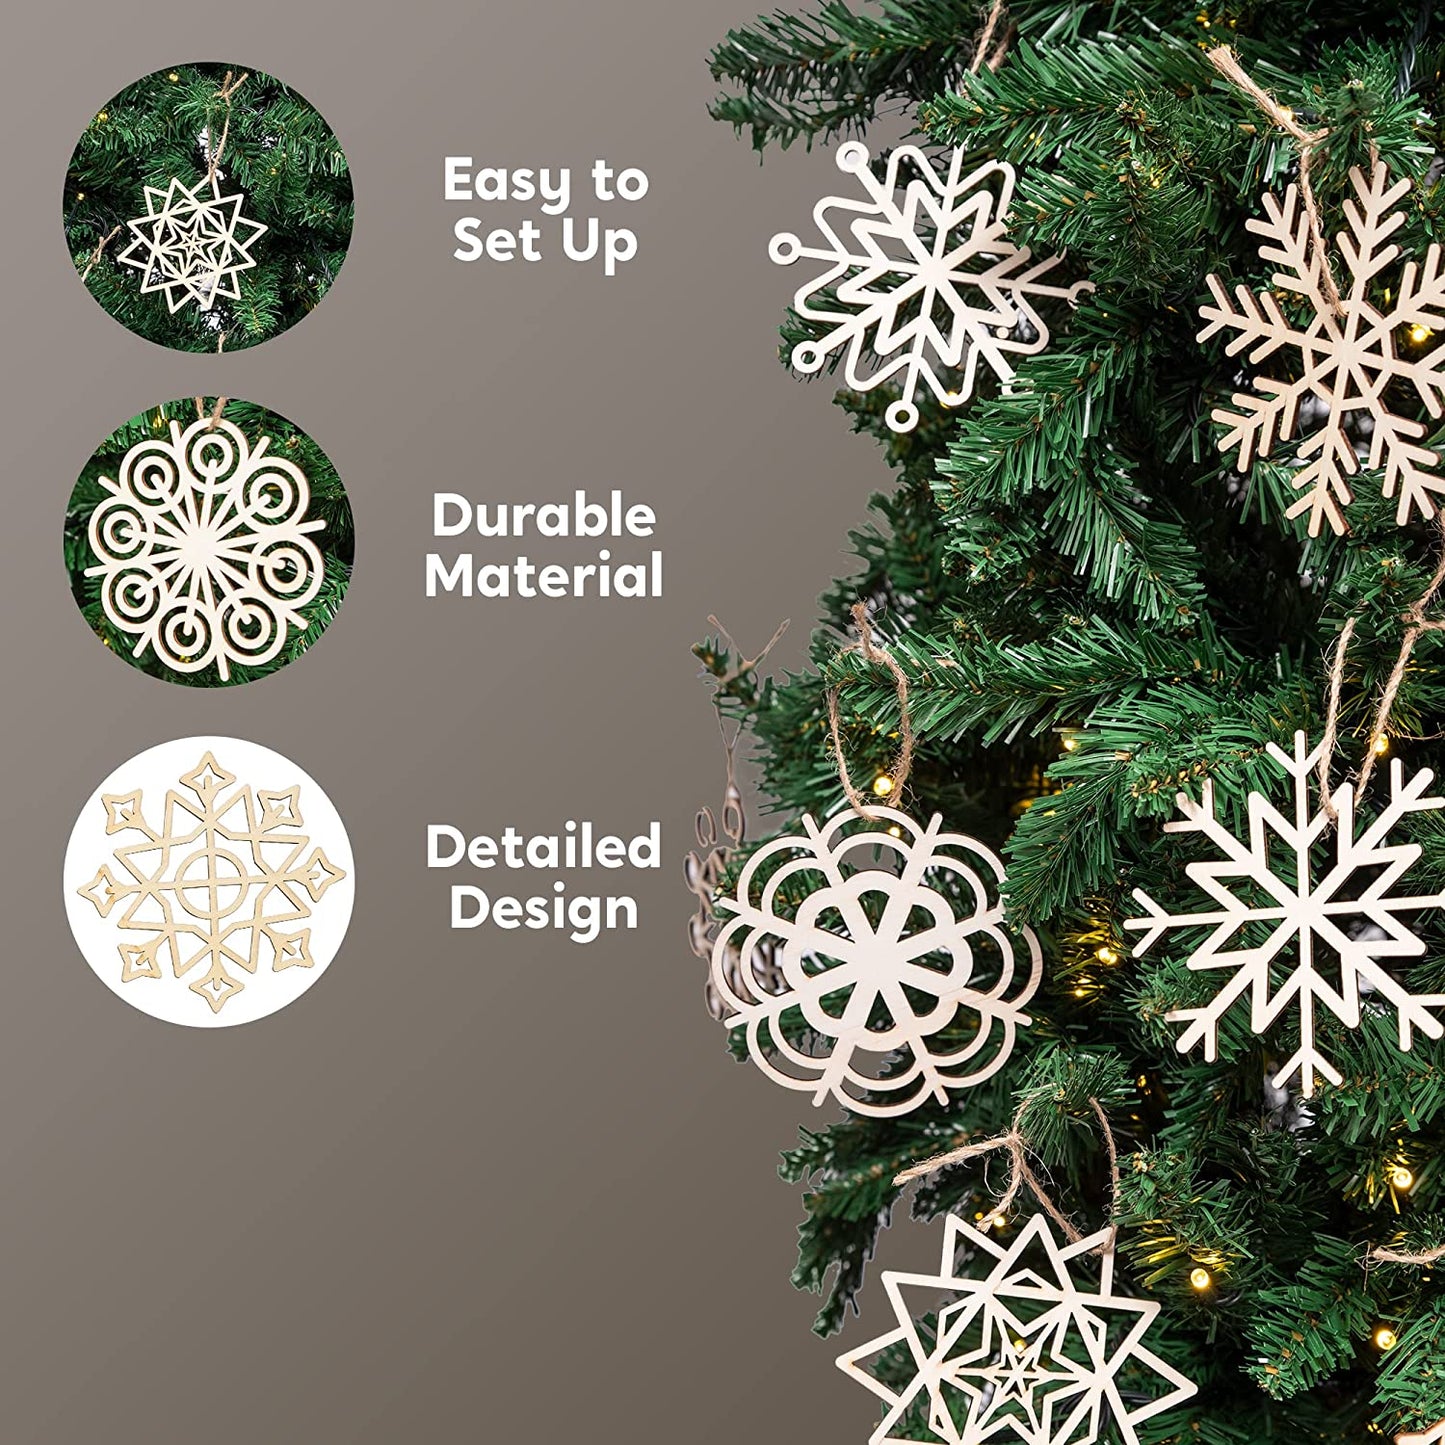 36Pcs Snowflake Wooden Ornaments